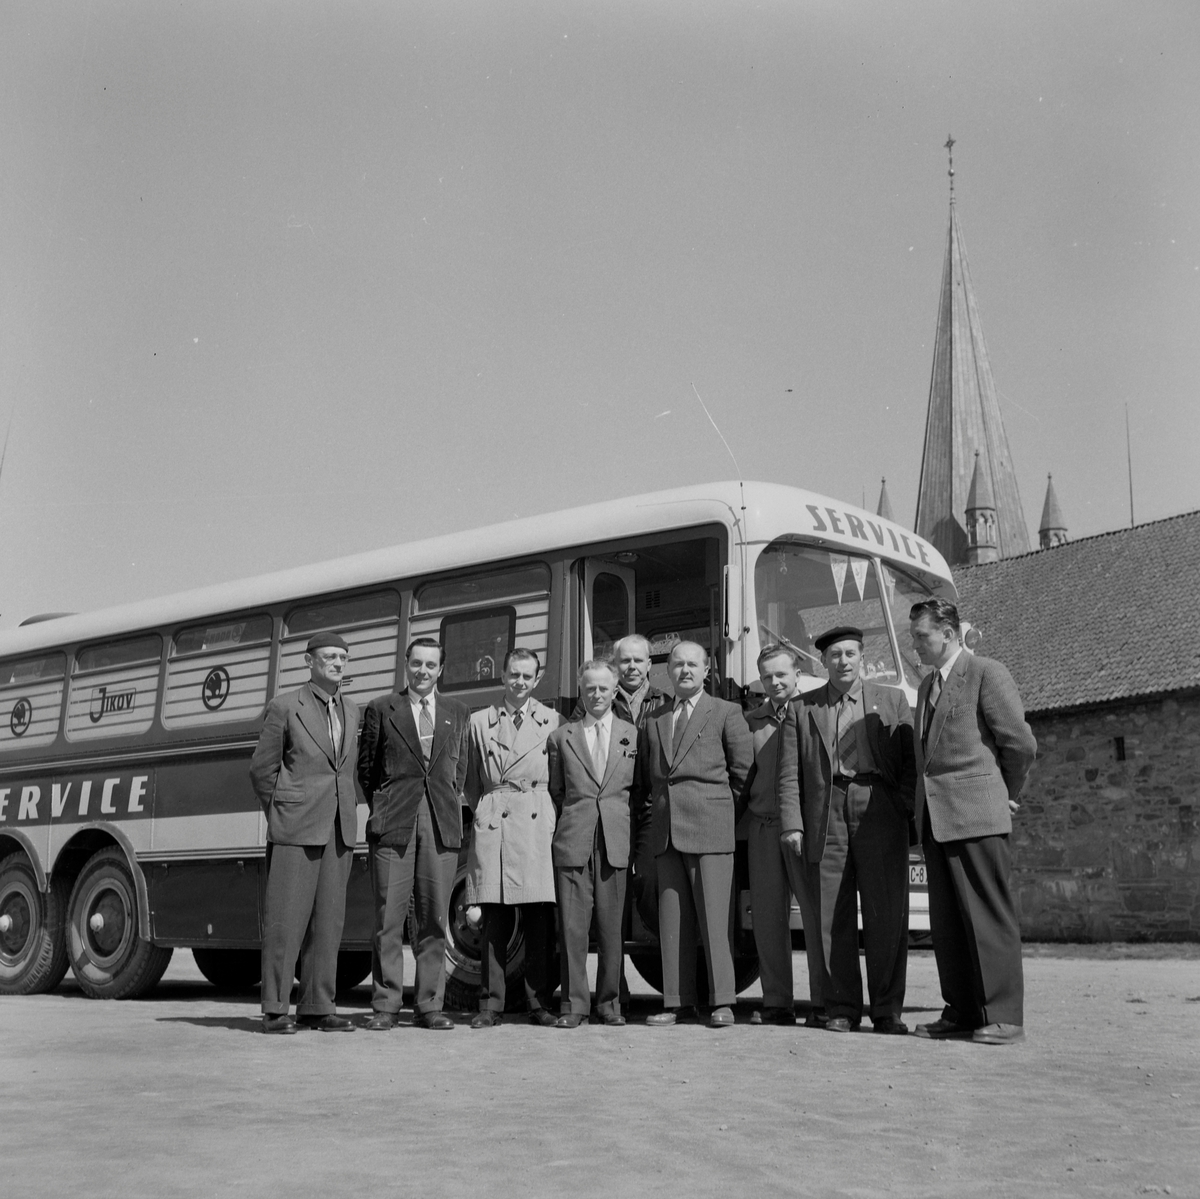 Skoda servicebuss